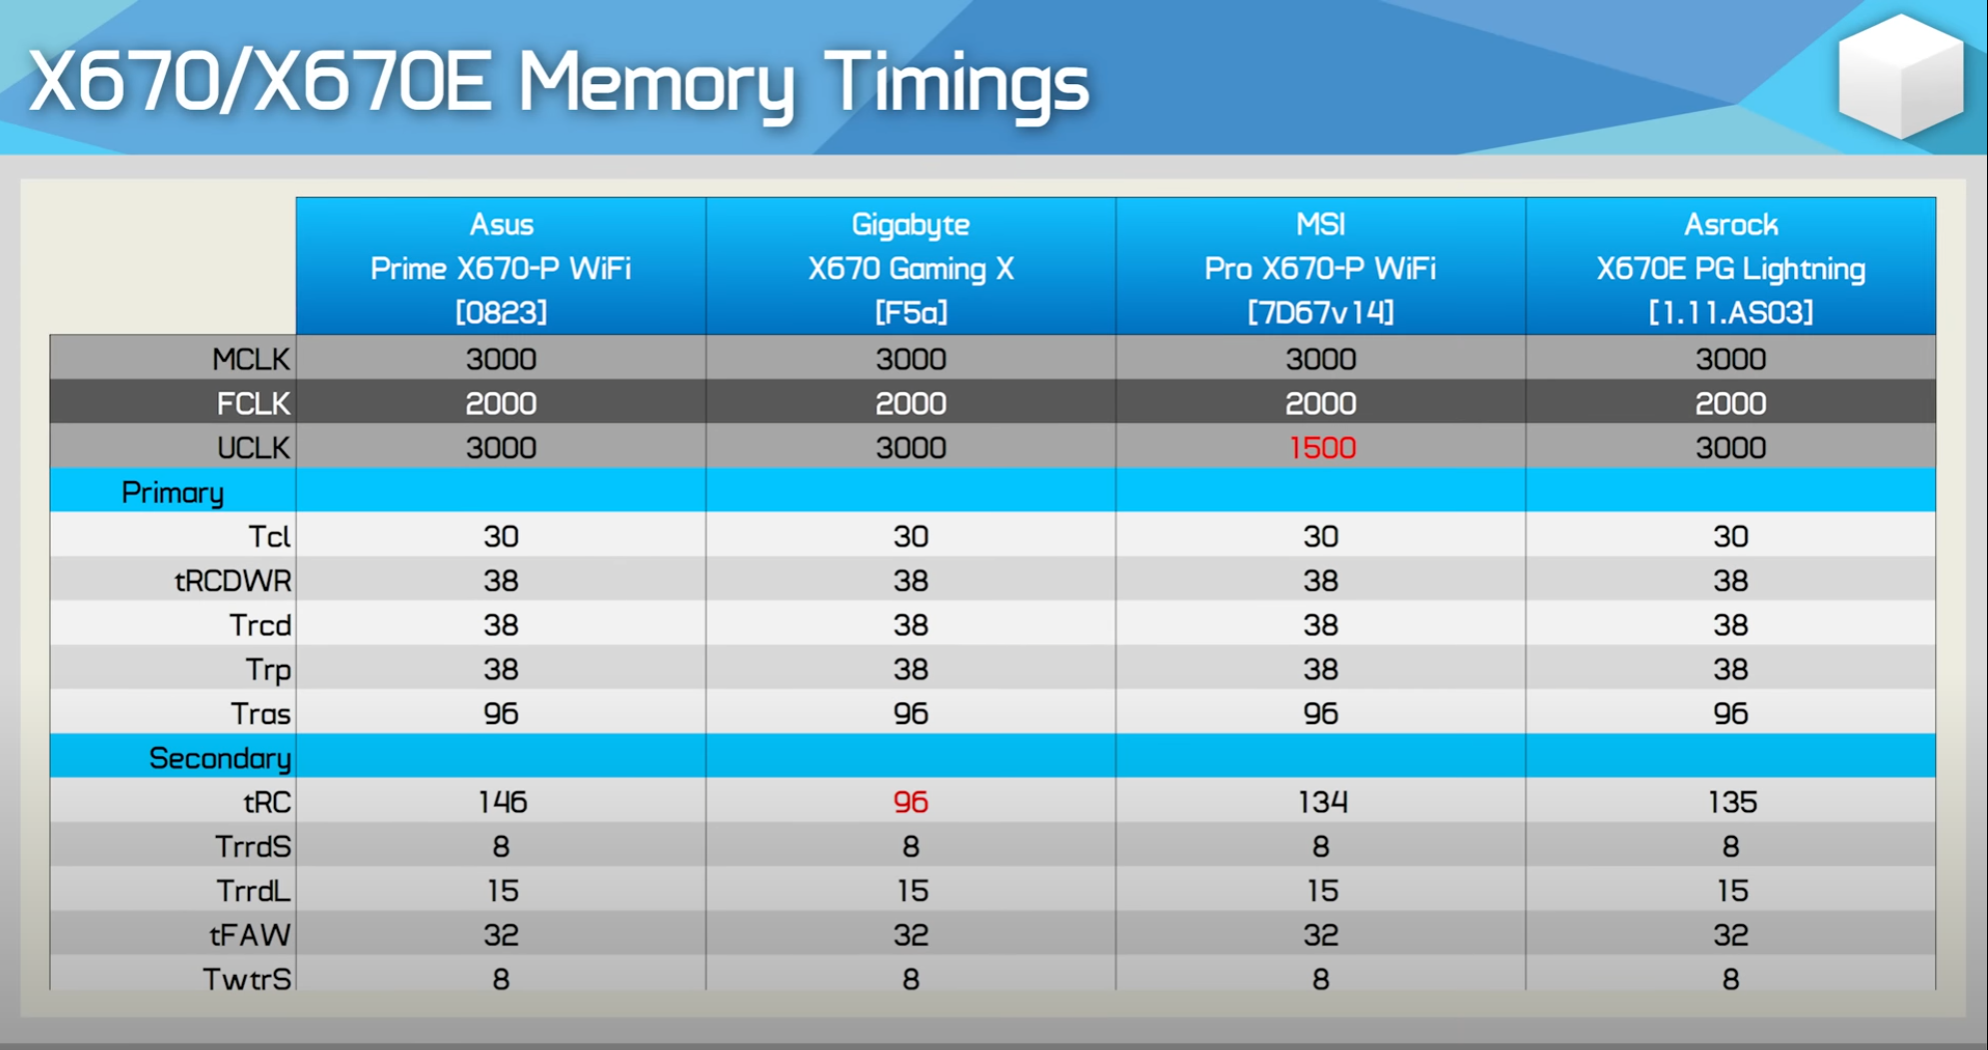 X670/X670E Memory Timings